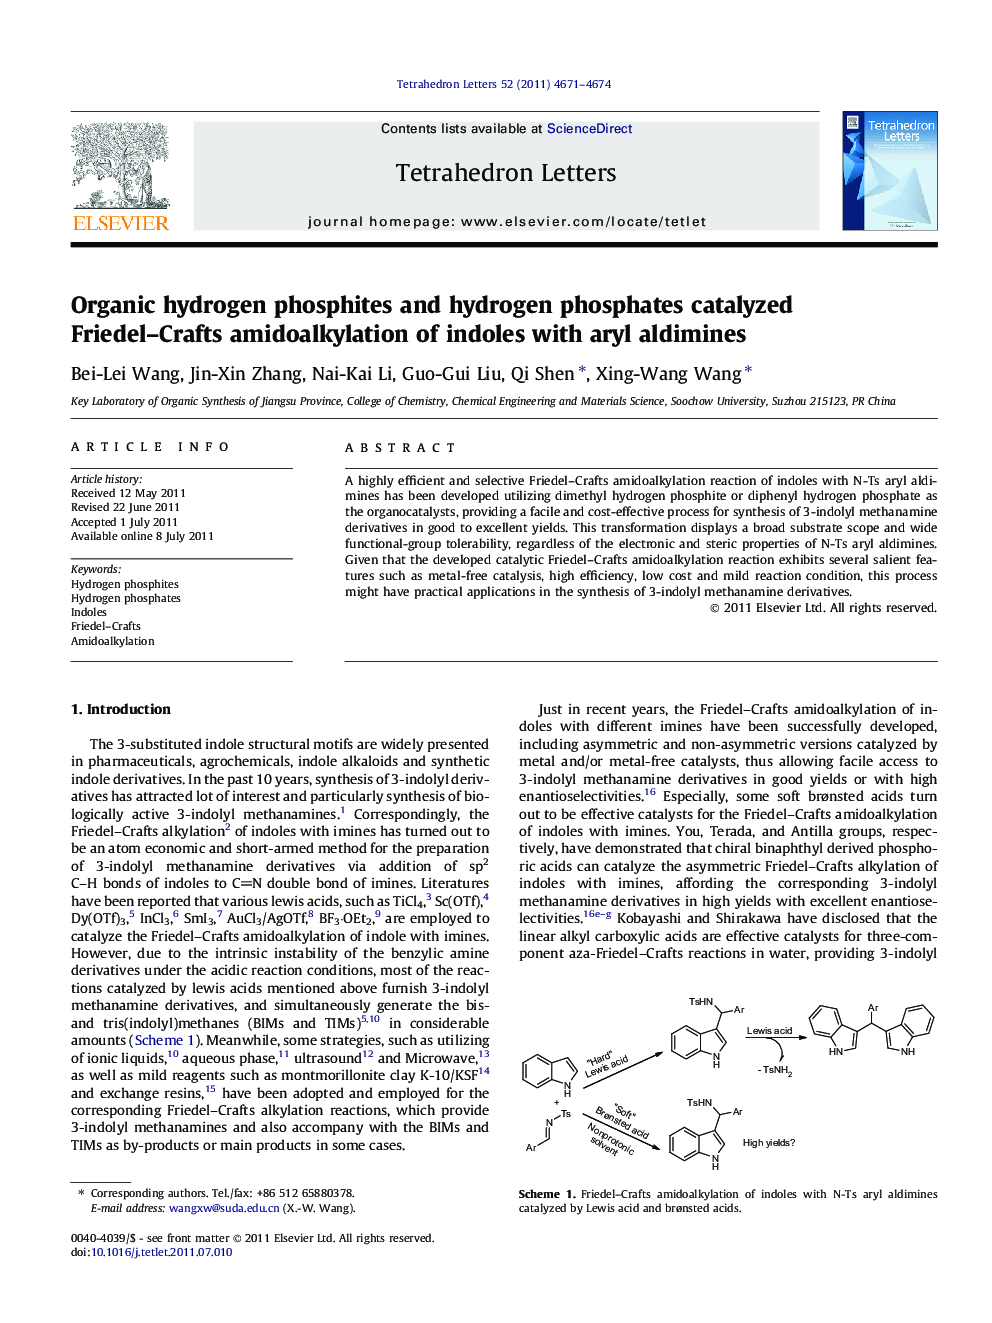 Organic hydrogen phosphites and hydrogen phosphates catalyzed Friedel-Crafts amidoalkylation of indoles with aryl aldimines